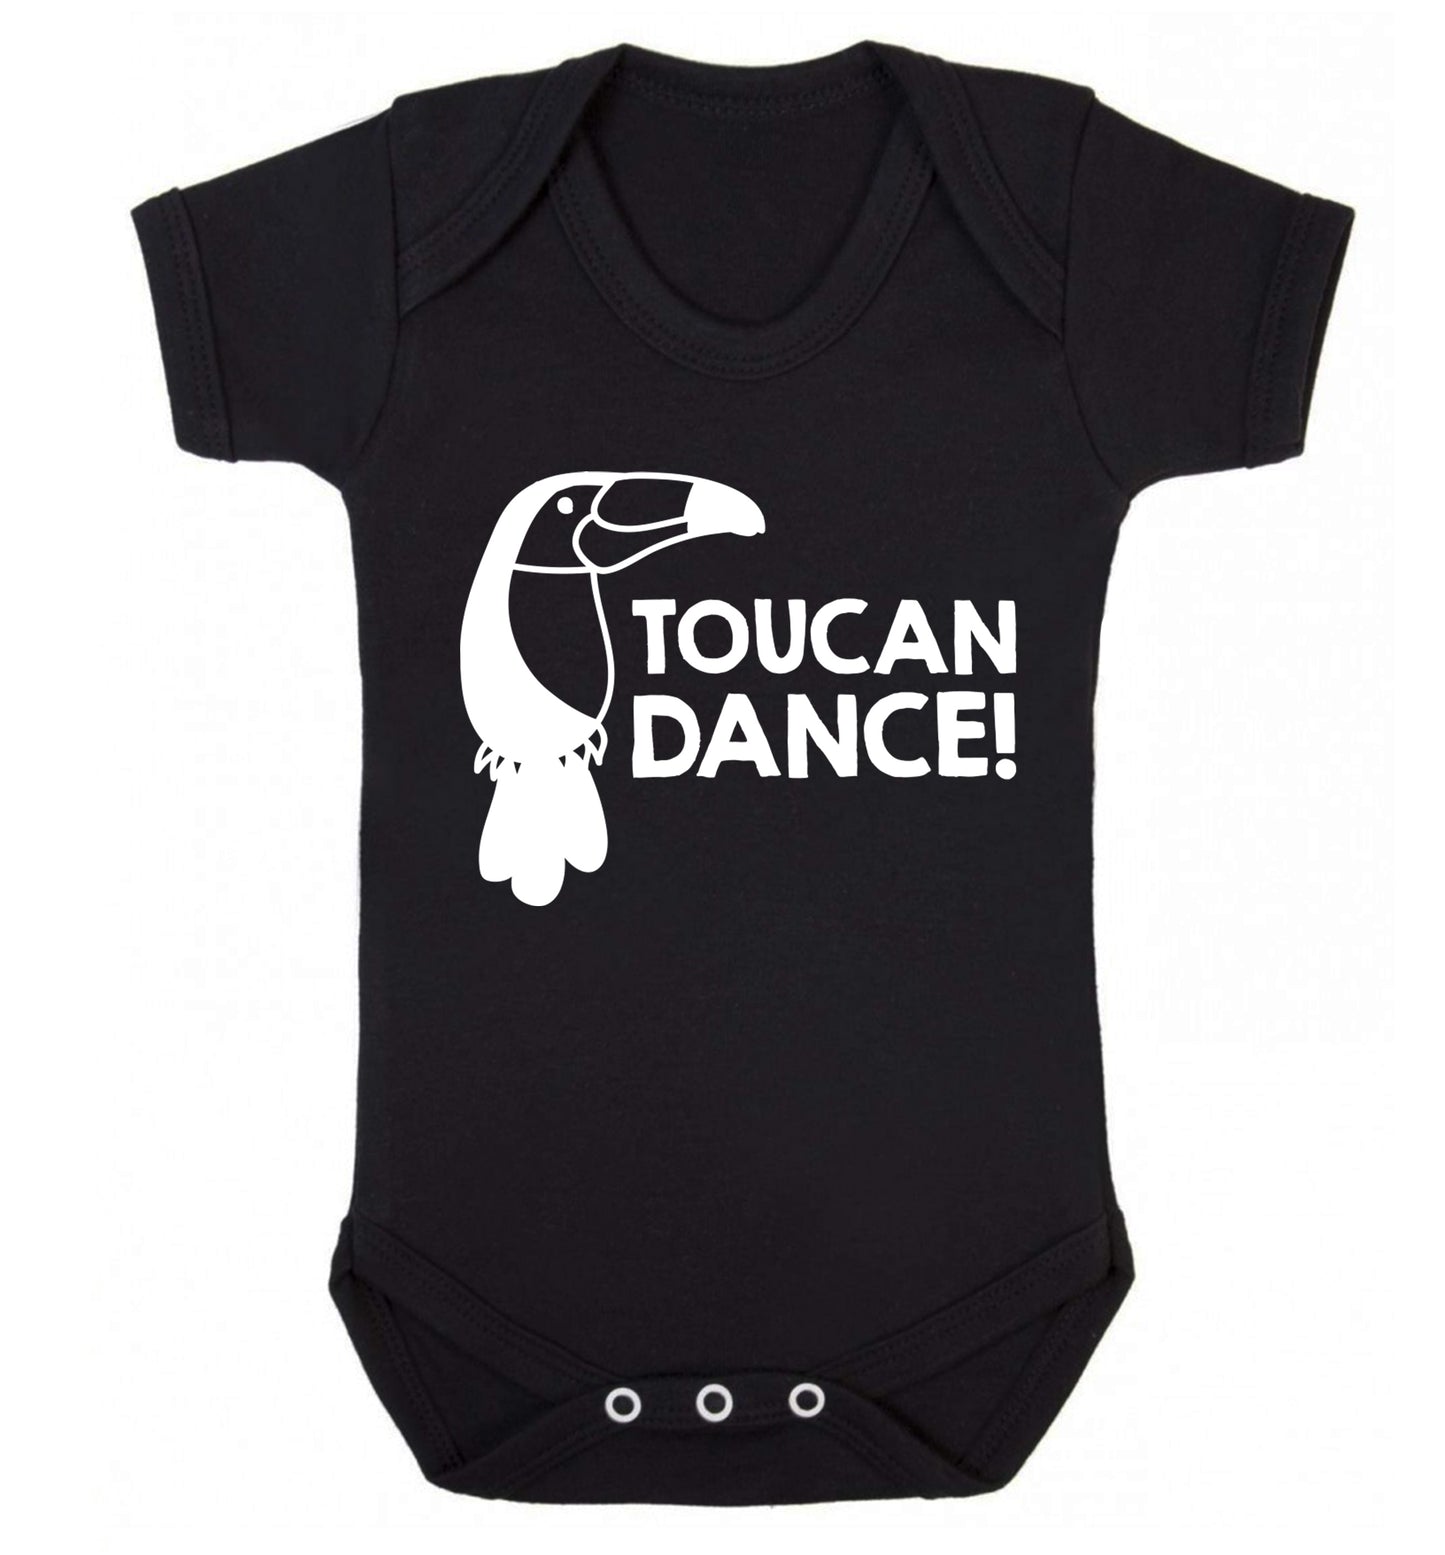 Toucan dance Baby Vest black 18-24 months